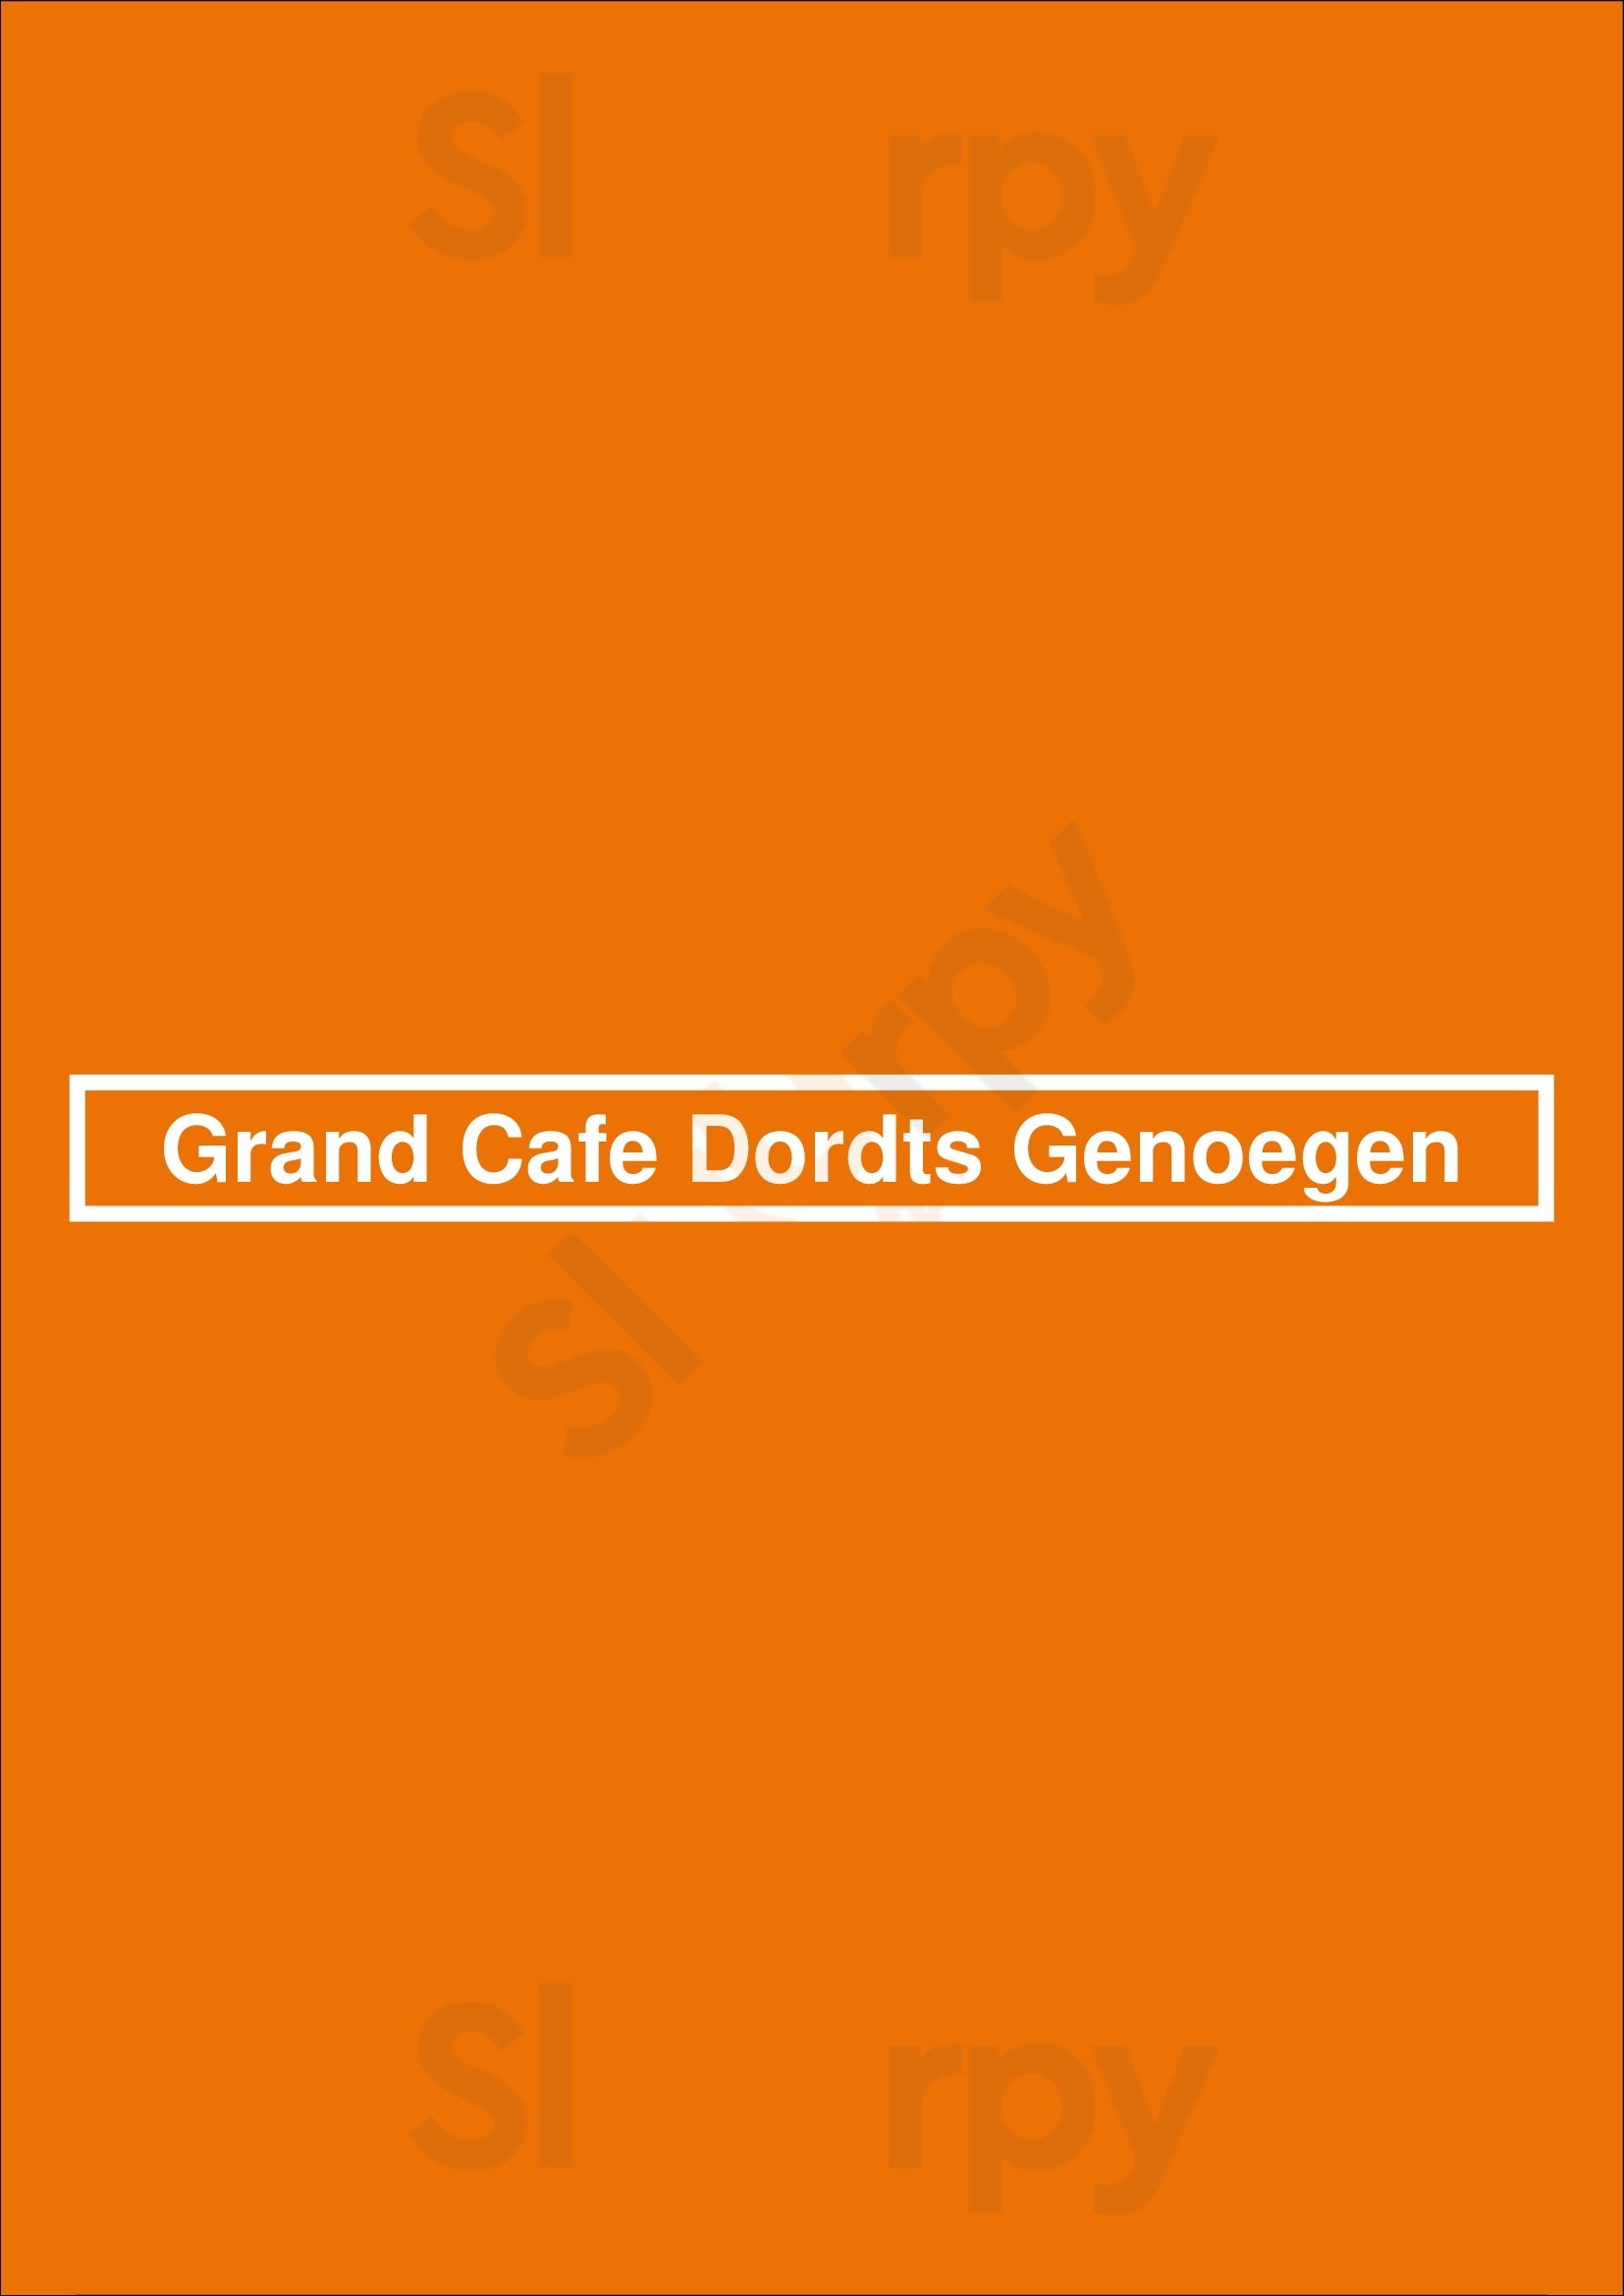 Grand Cafe Dordts Genoegen Dordrecht Menu - 1